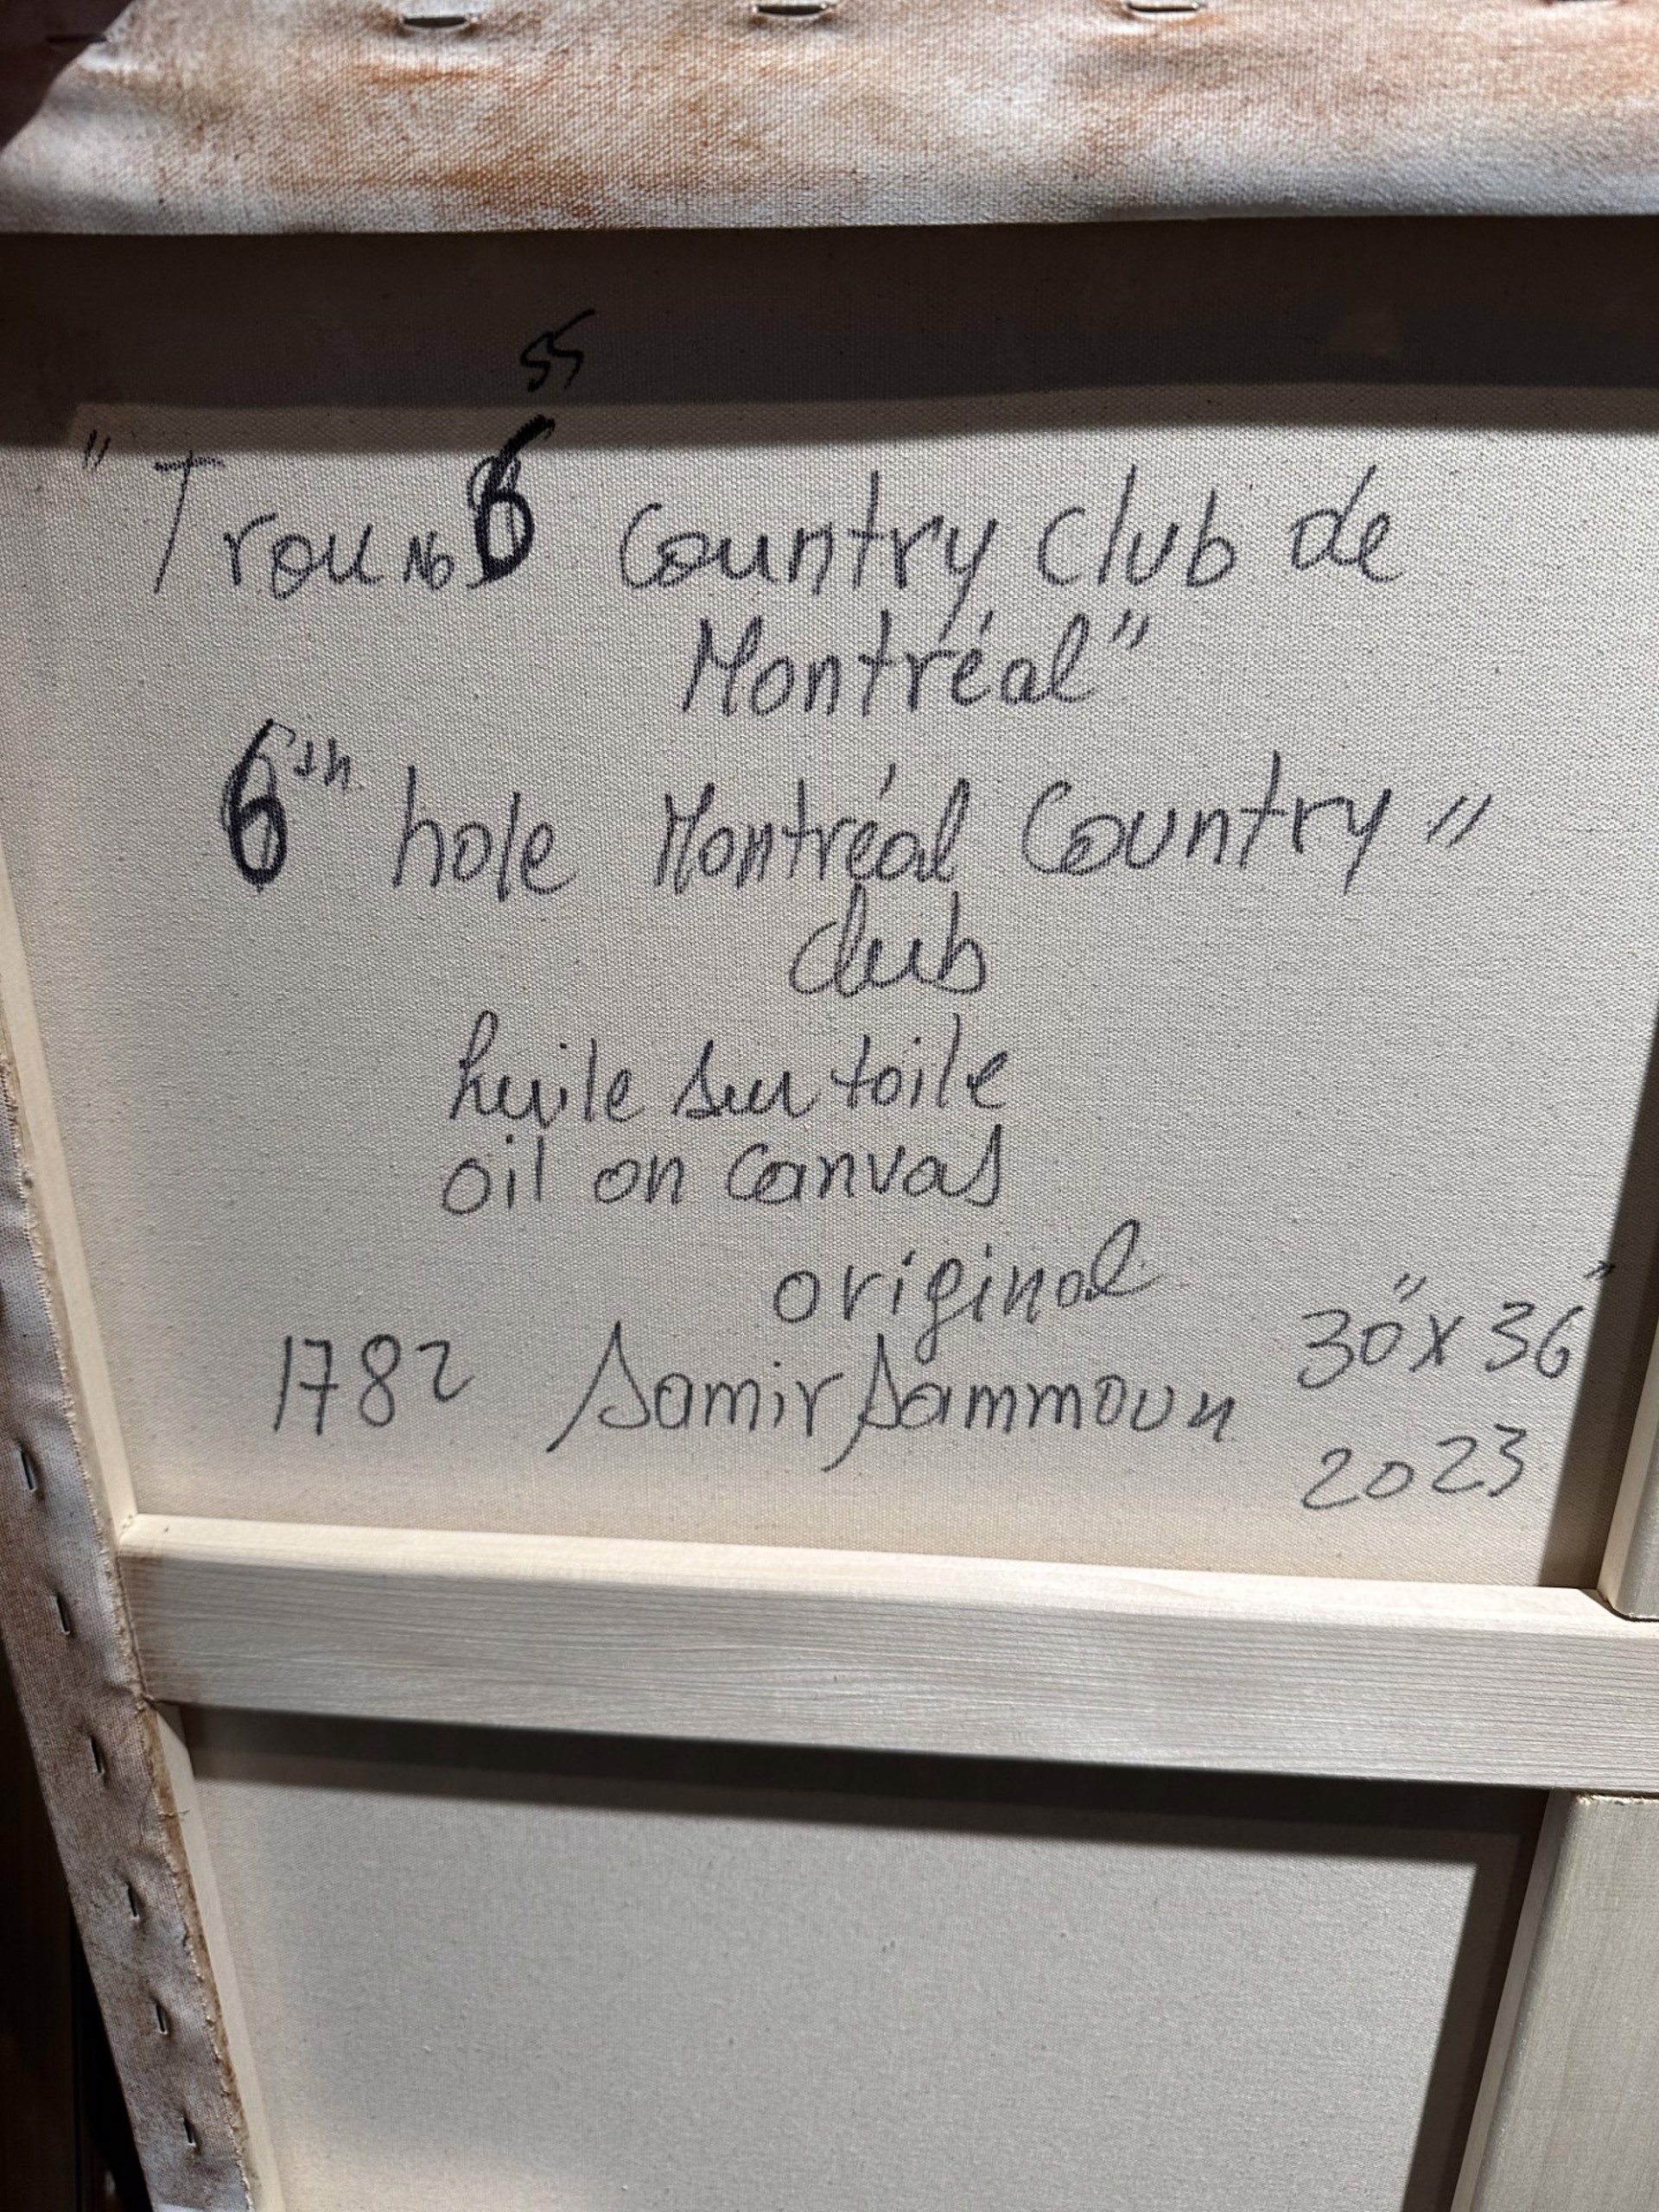 Trou no, 6, Country Club de Montréal, 6th hole, Montreal Country Club, 30x36 by Samir Sammoun